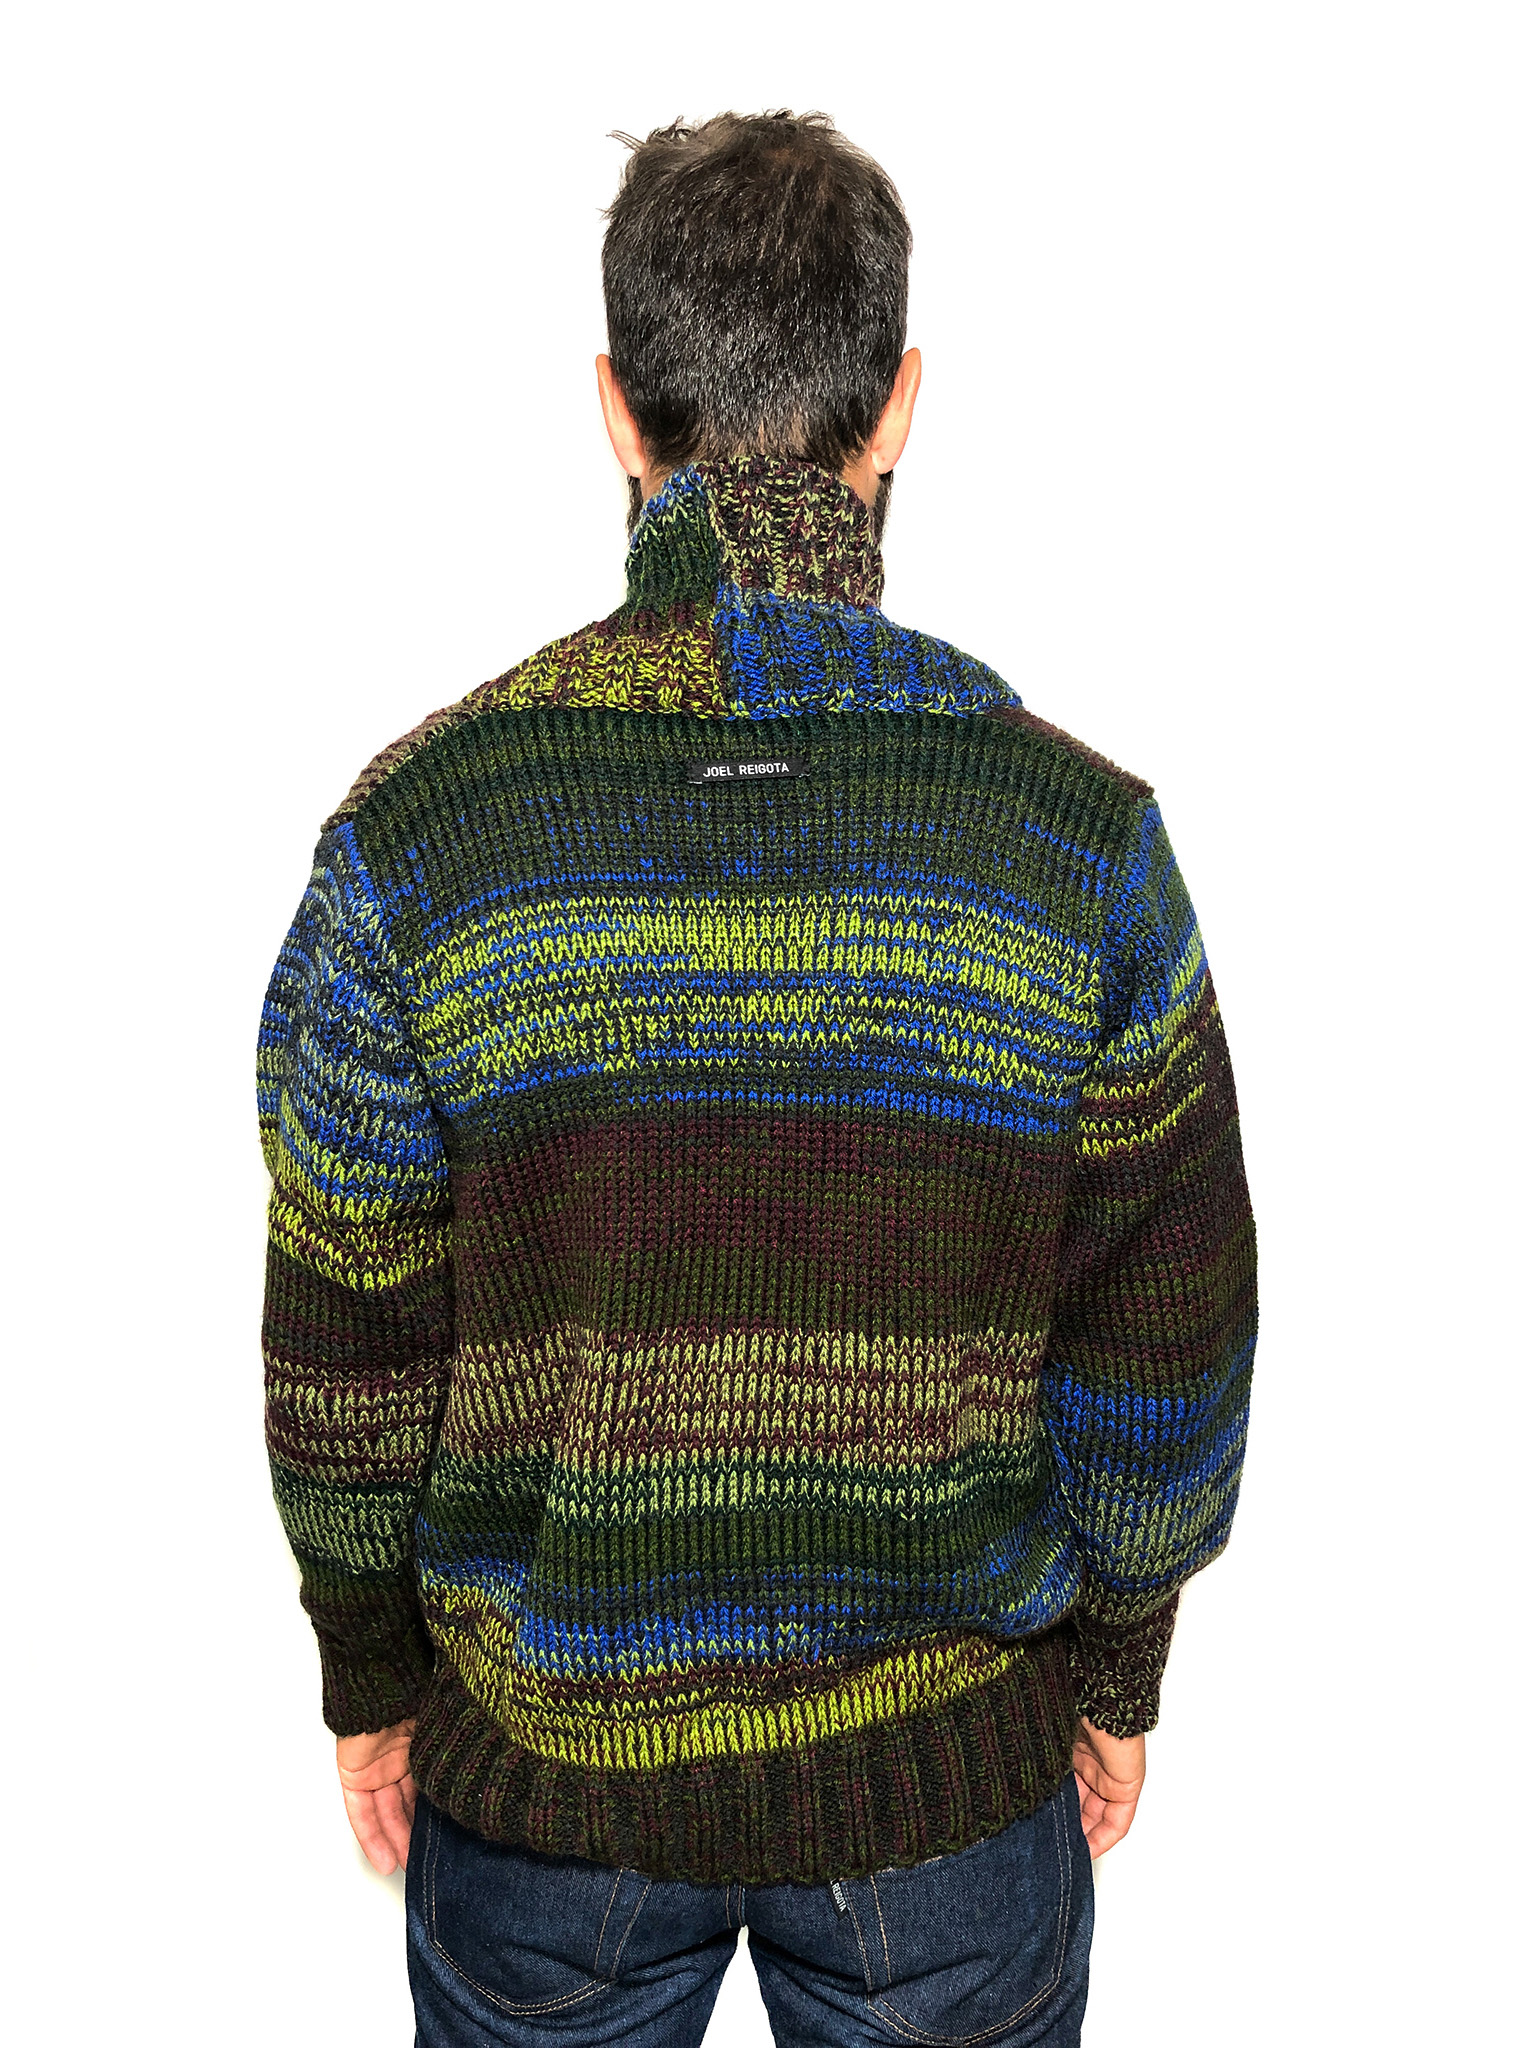 Multicolored Wool Jumper